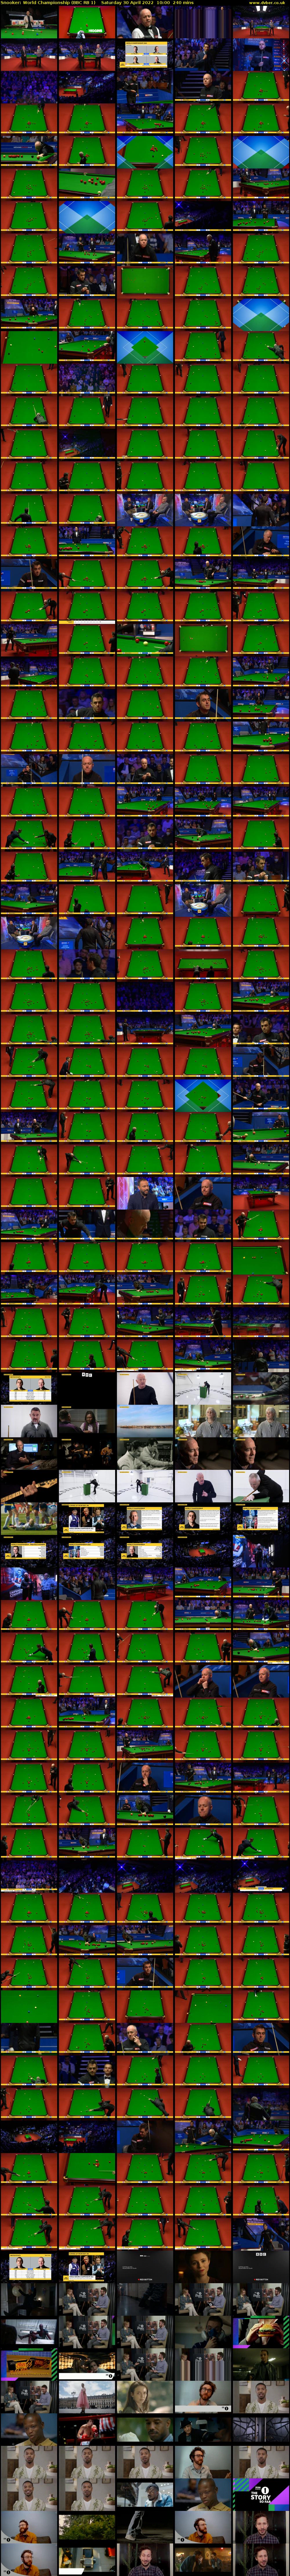 Snooker: World Championship (BBC RB 1) Saturday 30 April 2022 10:00 - 14:00